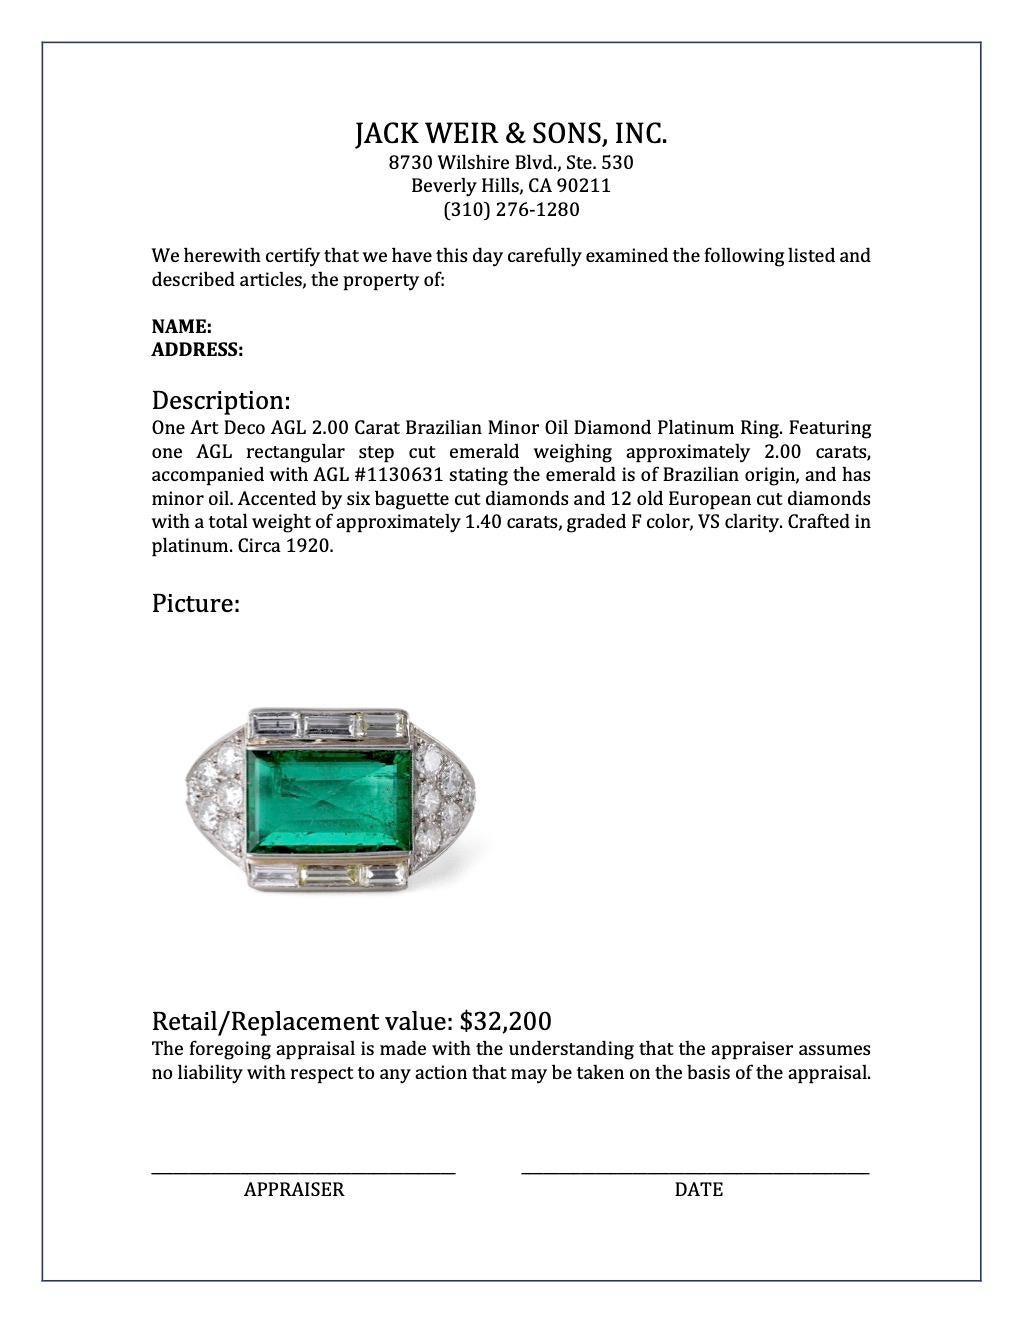 Art Deco AGL 2.00 Carat Brazilian Minor Oil Diamond Platinum Ring 1